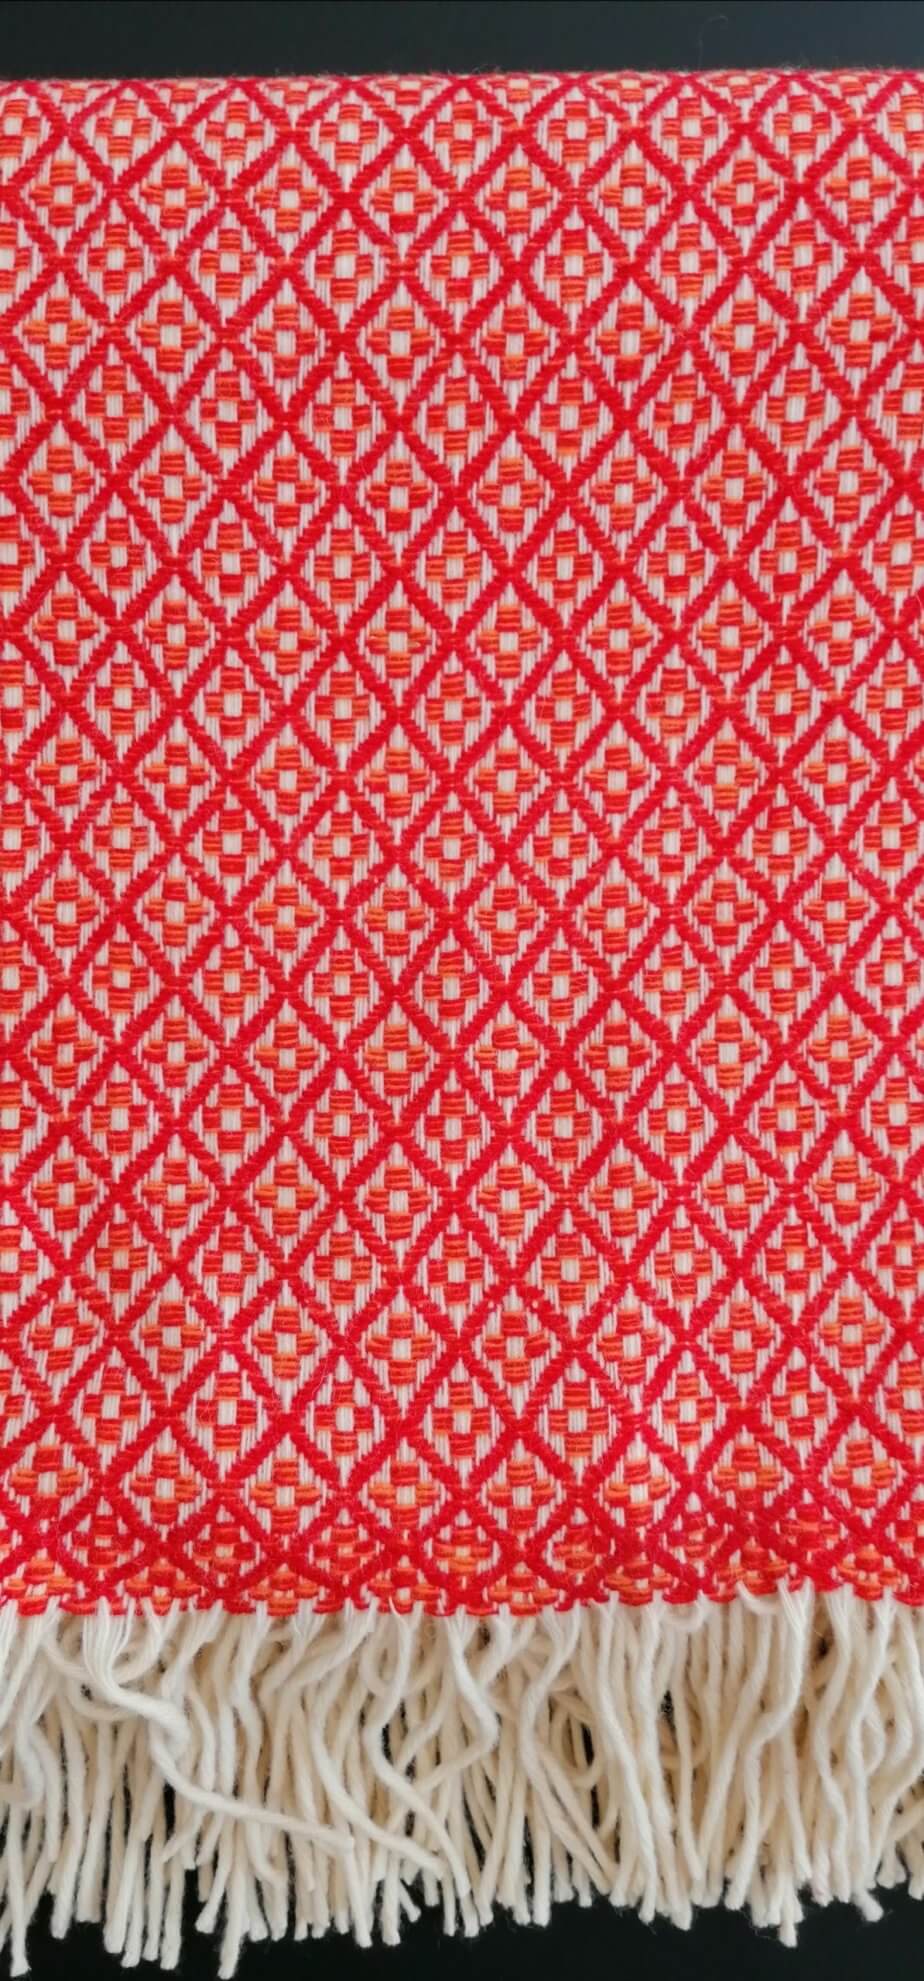 Pure wool blanket - red flower pattern